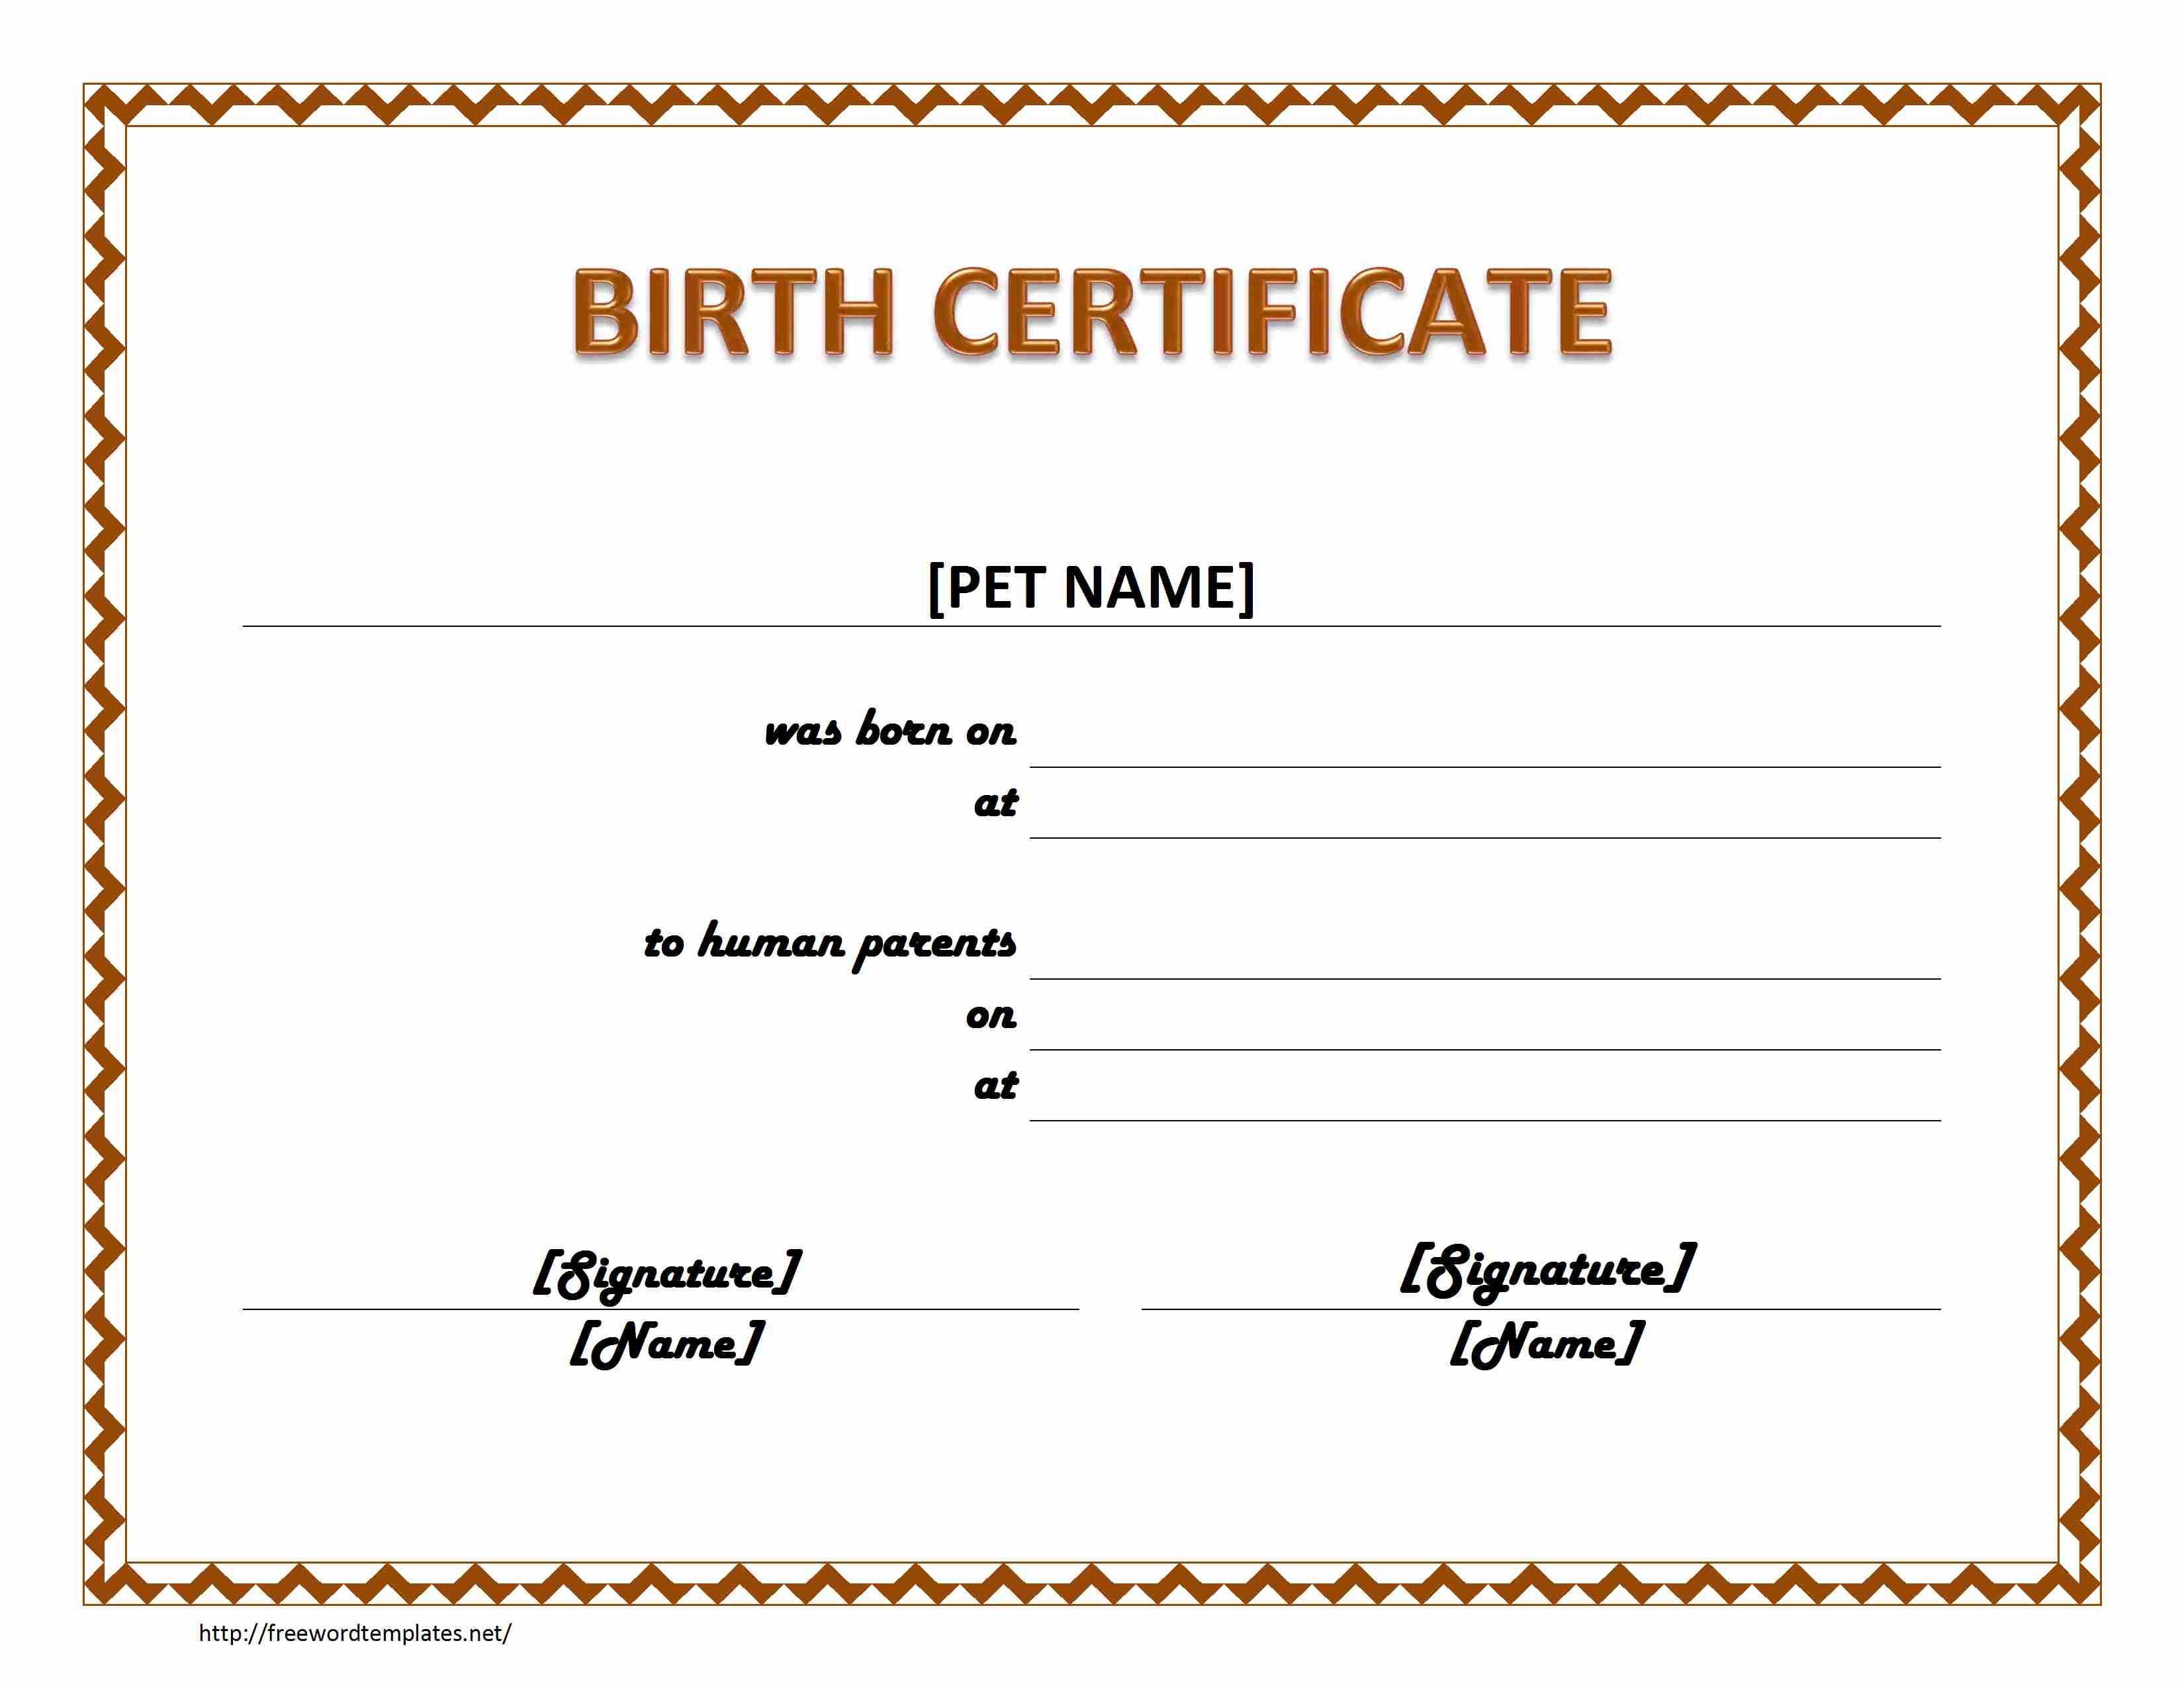 Pet Birth Certificate Maker | Pet Birth Certificate For Word Inside Birth Certificate Template For Microsoft Word